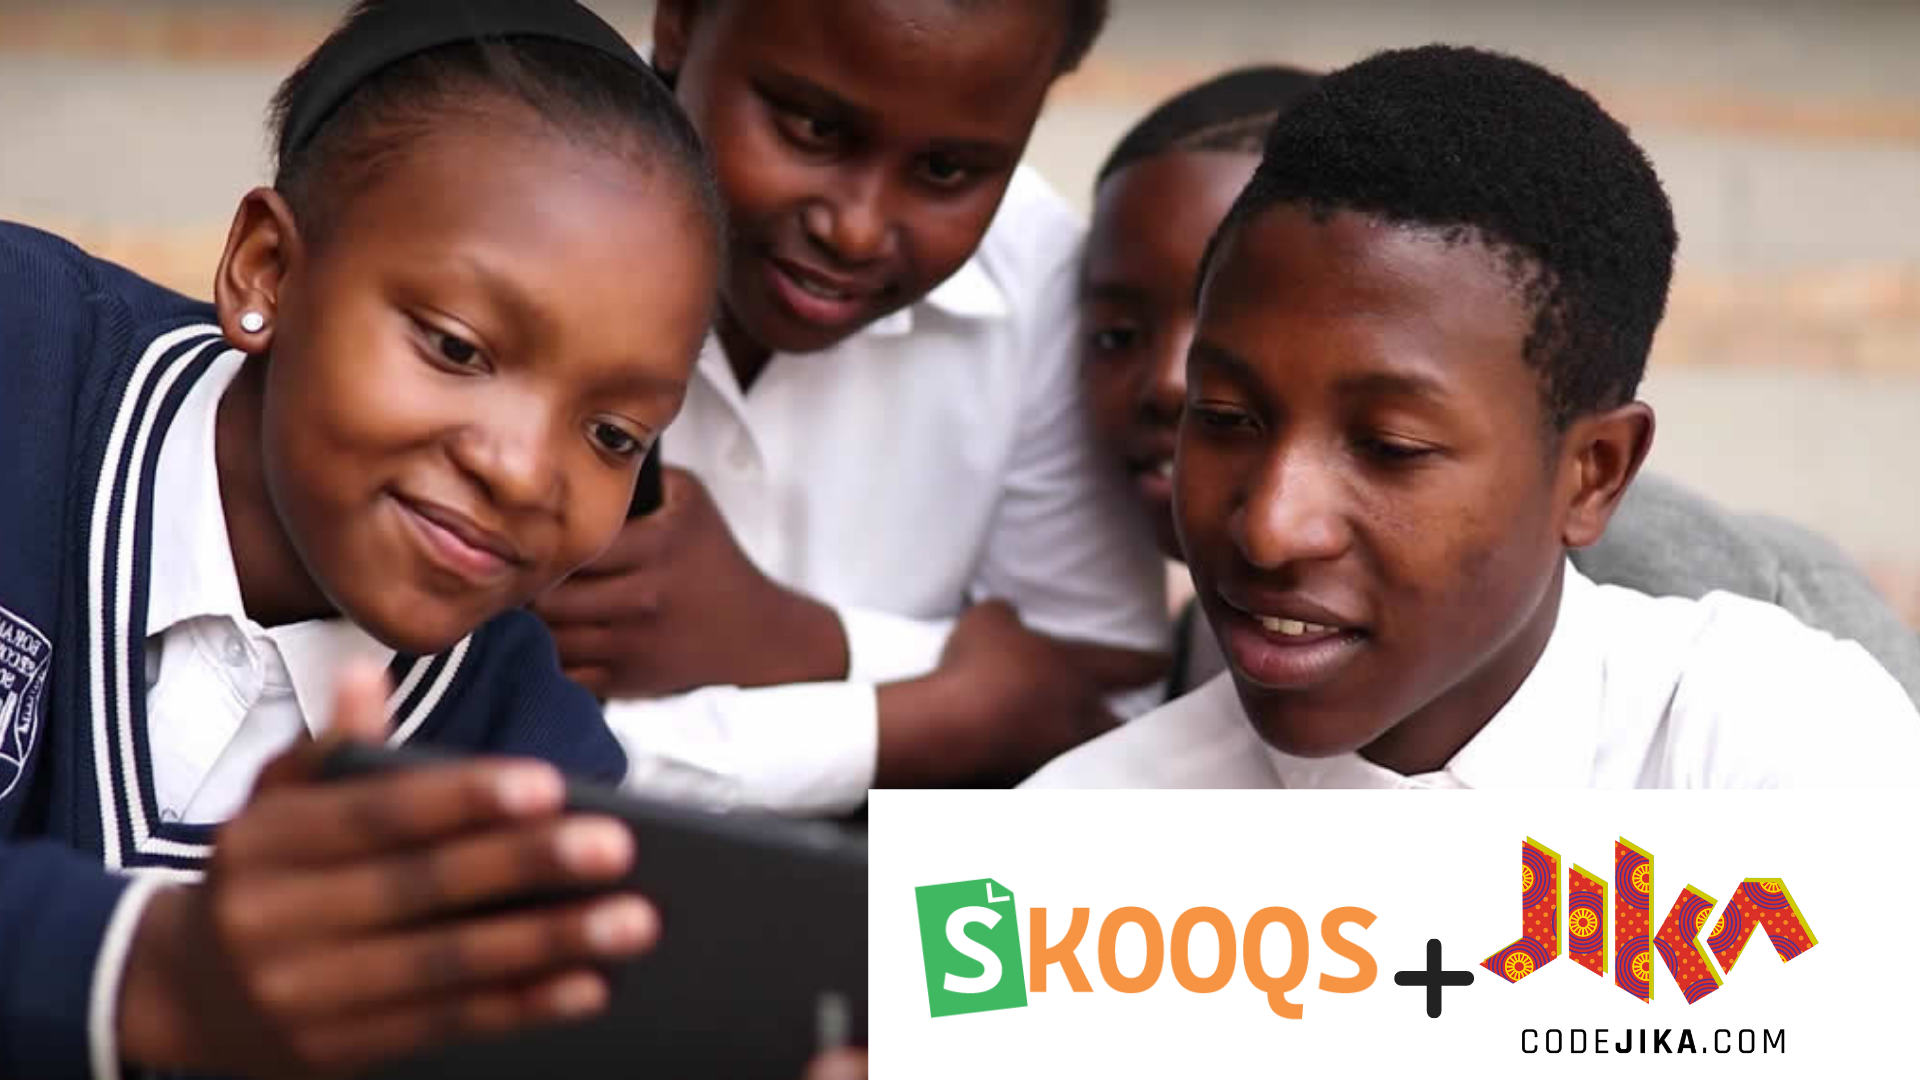 Skooqs partners with CodeJIKA.com